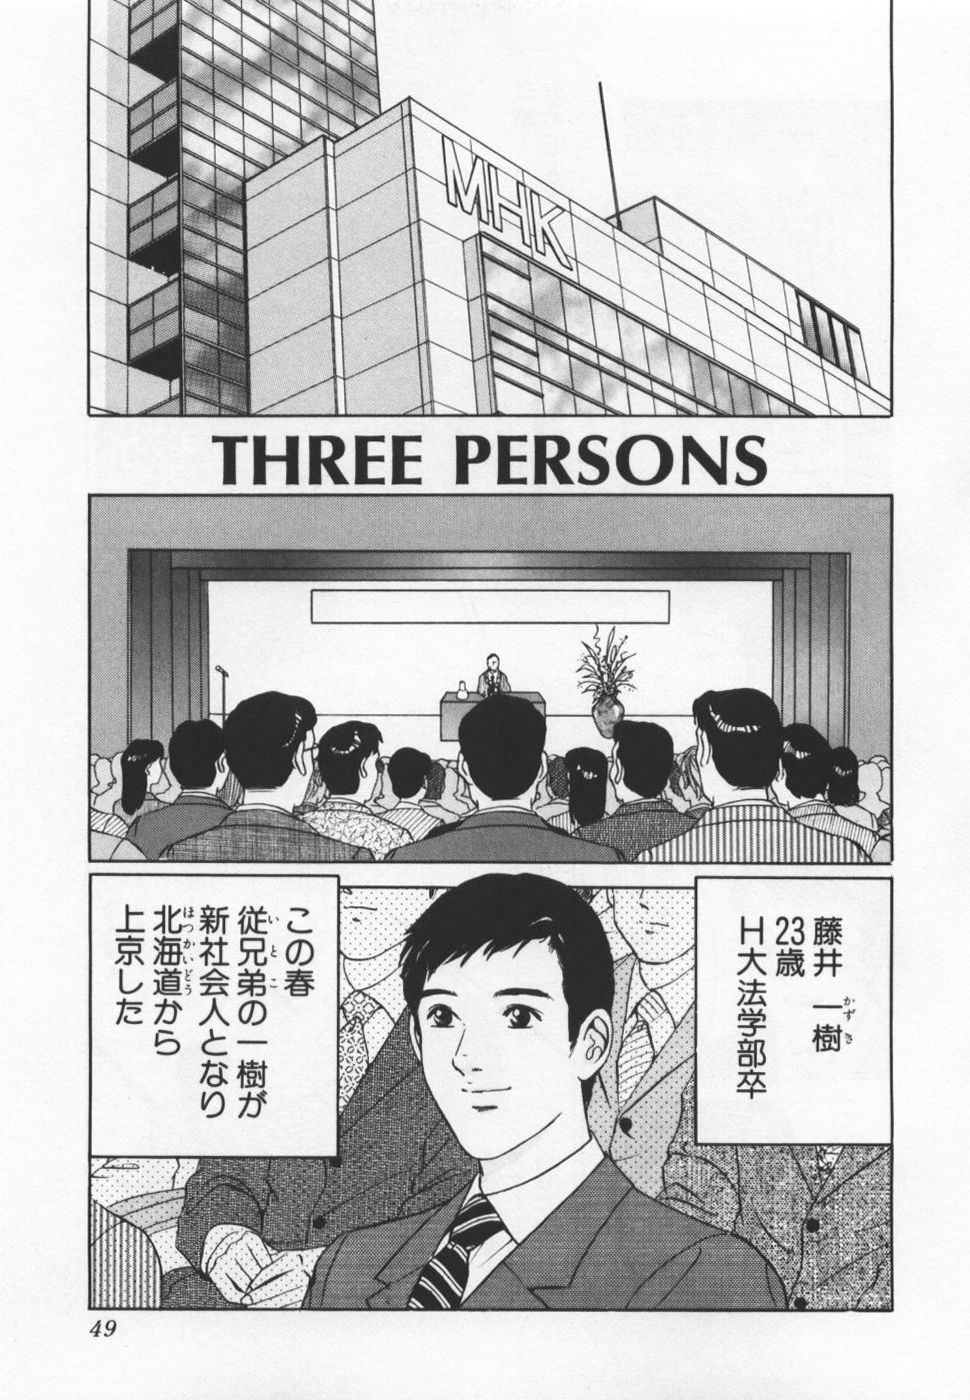 [Kenichi Kotani] Desire Premium Collection I [小谷憲一] DESIRE Premium Collection 第01巻